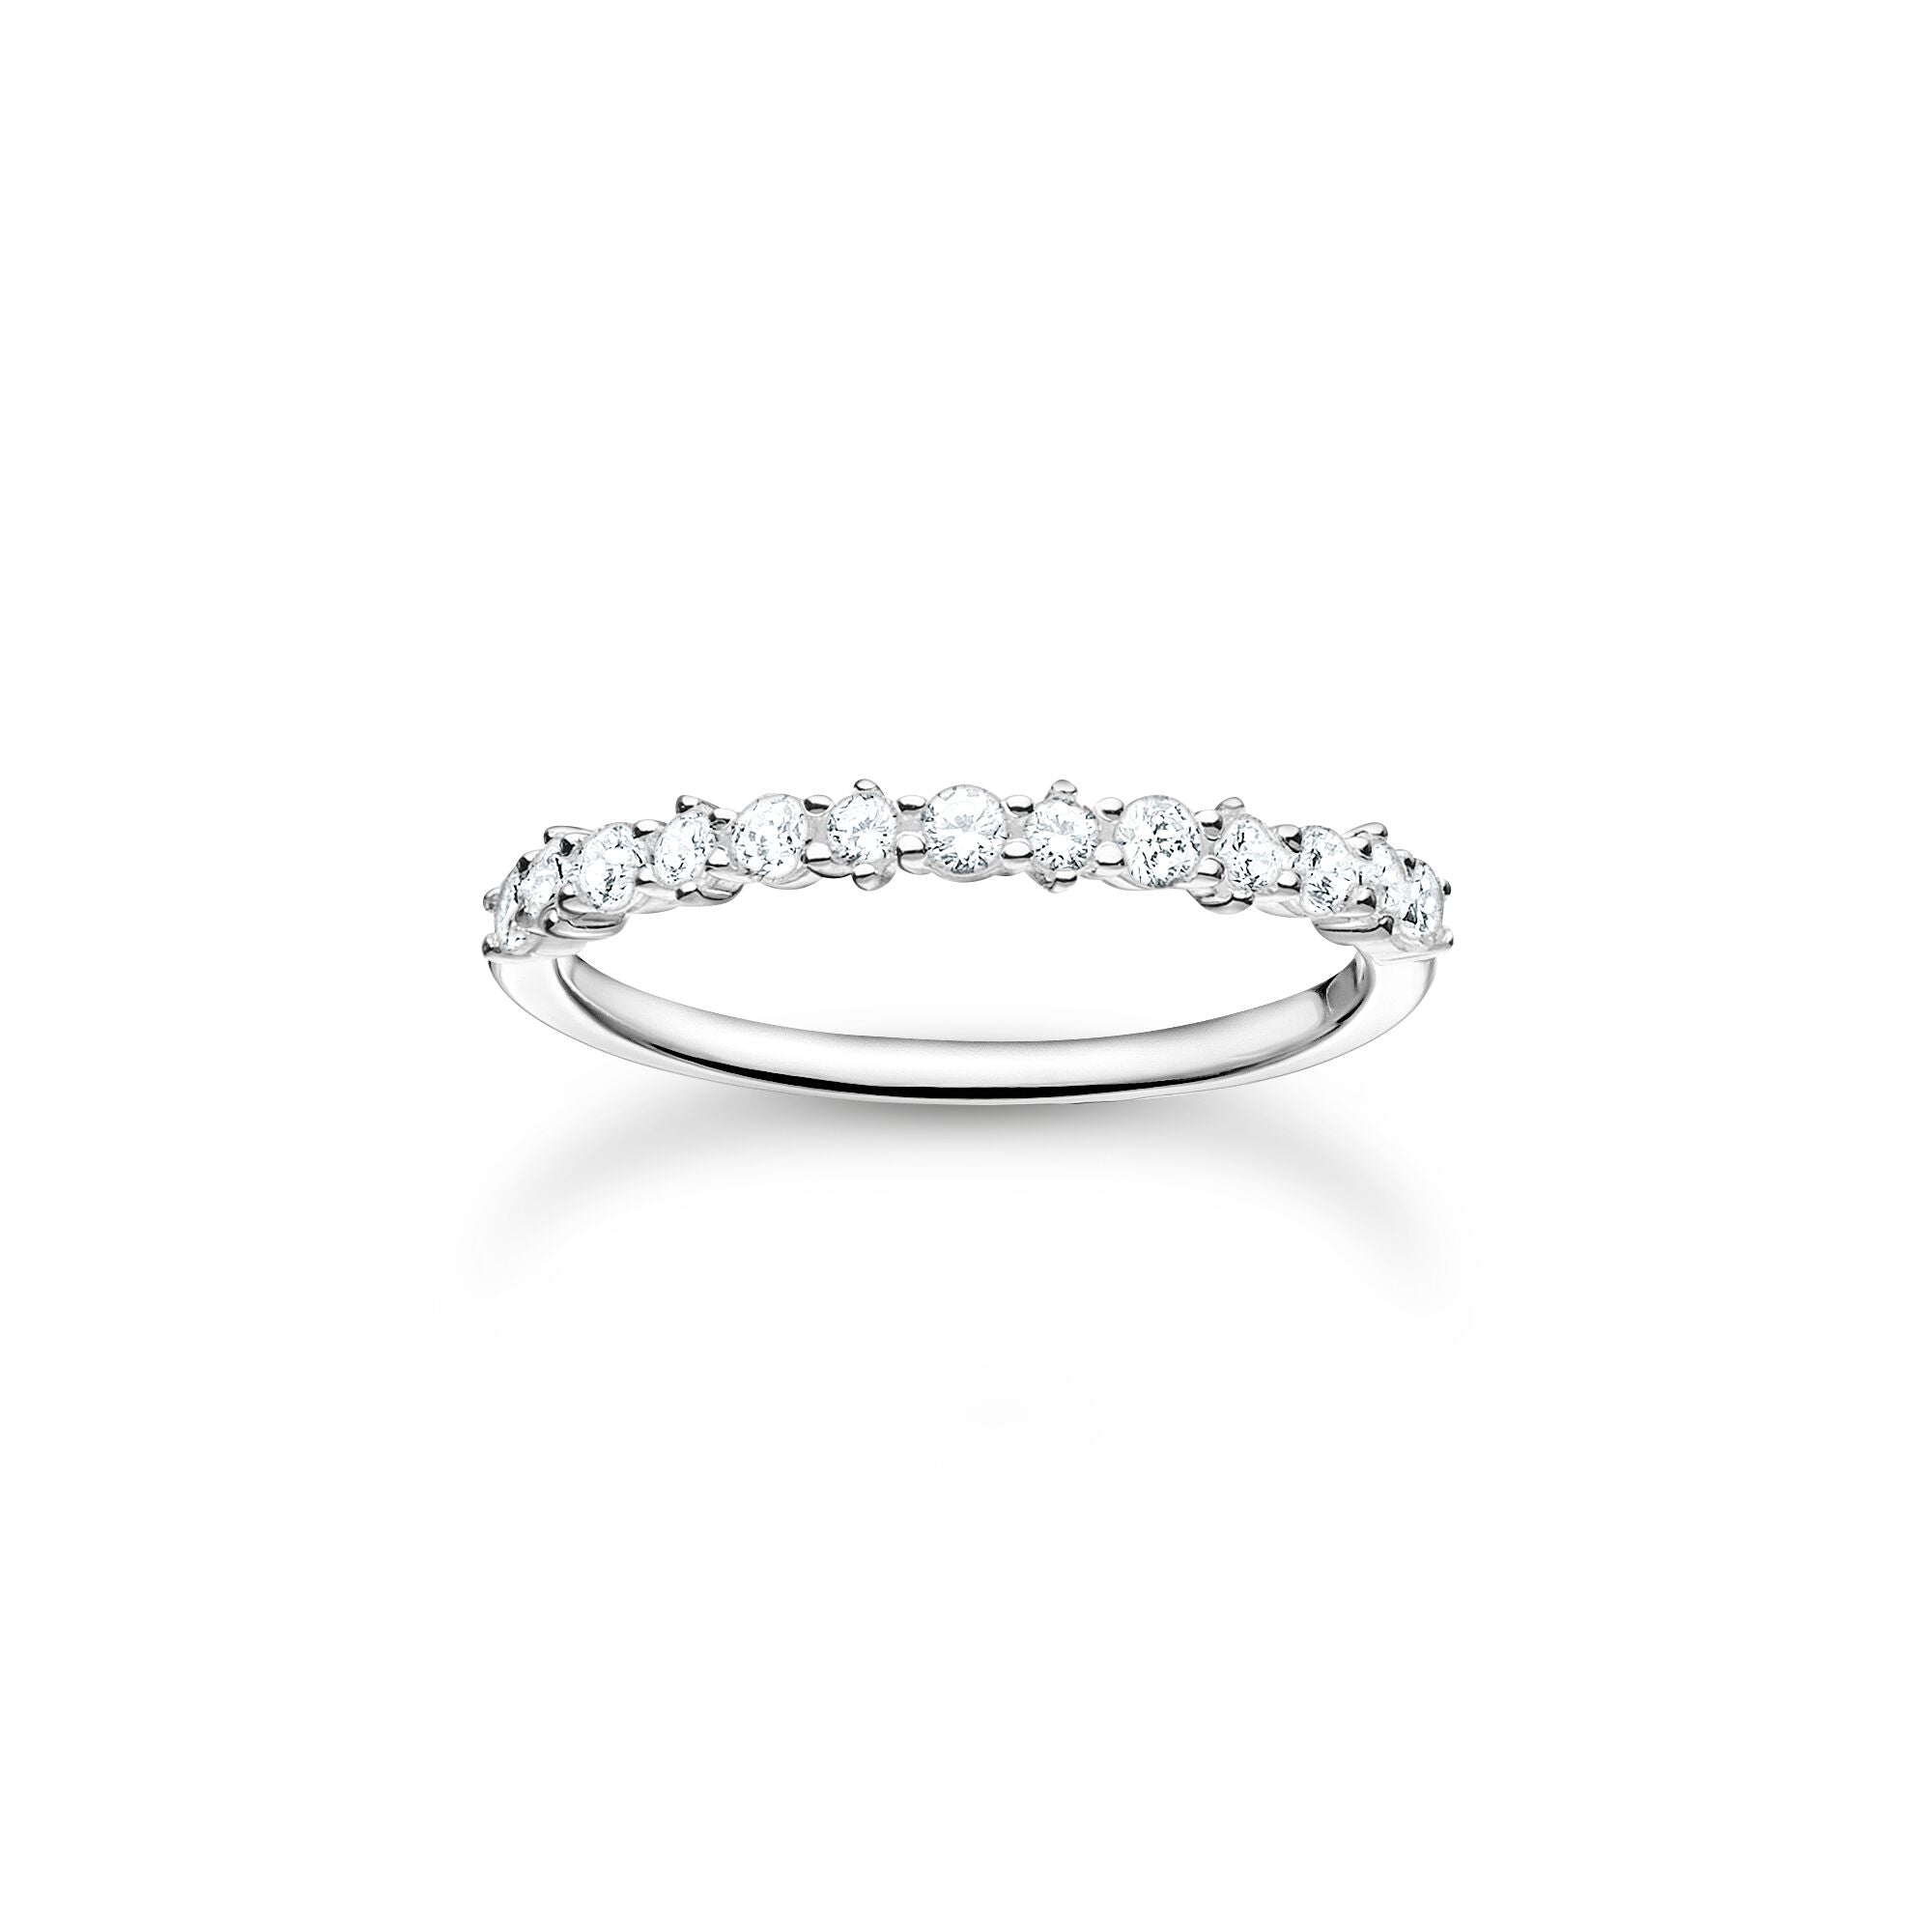 White Stone Ring - Silver